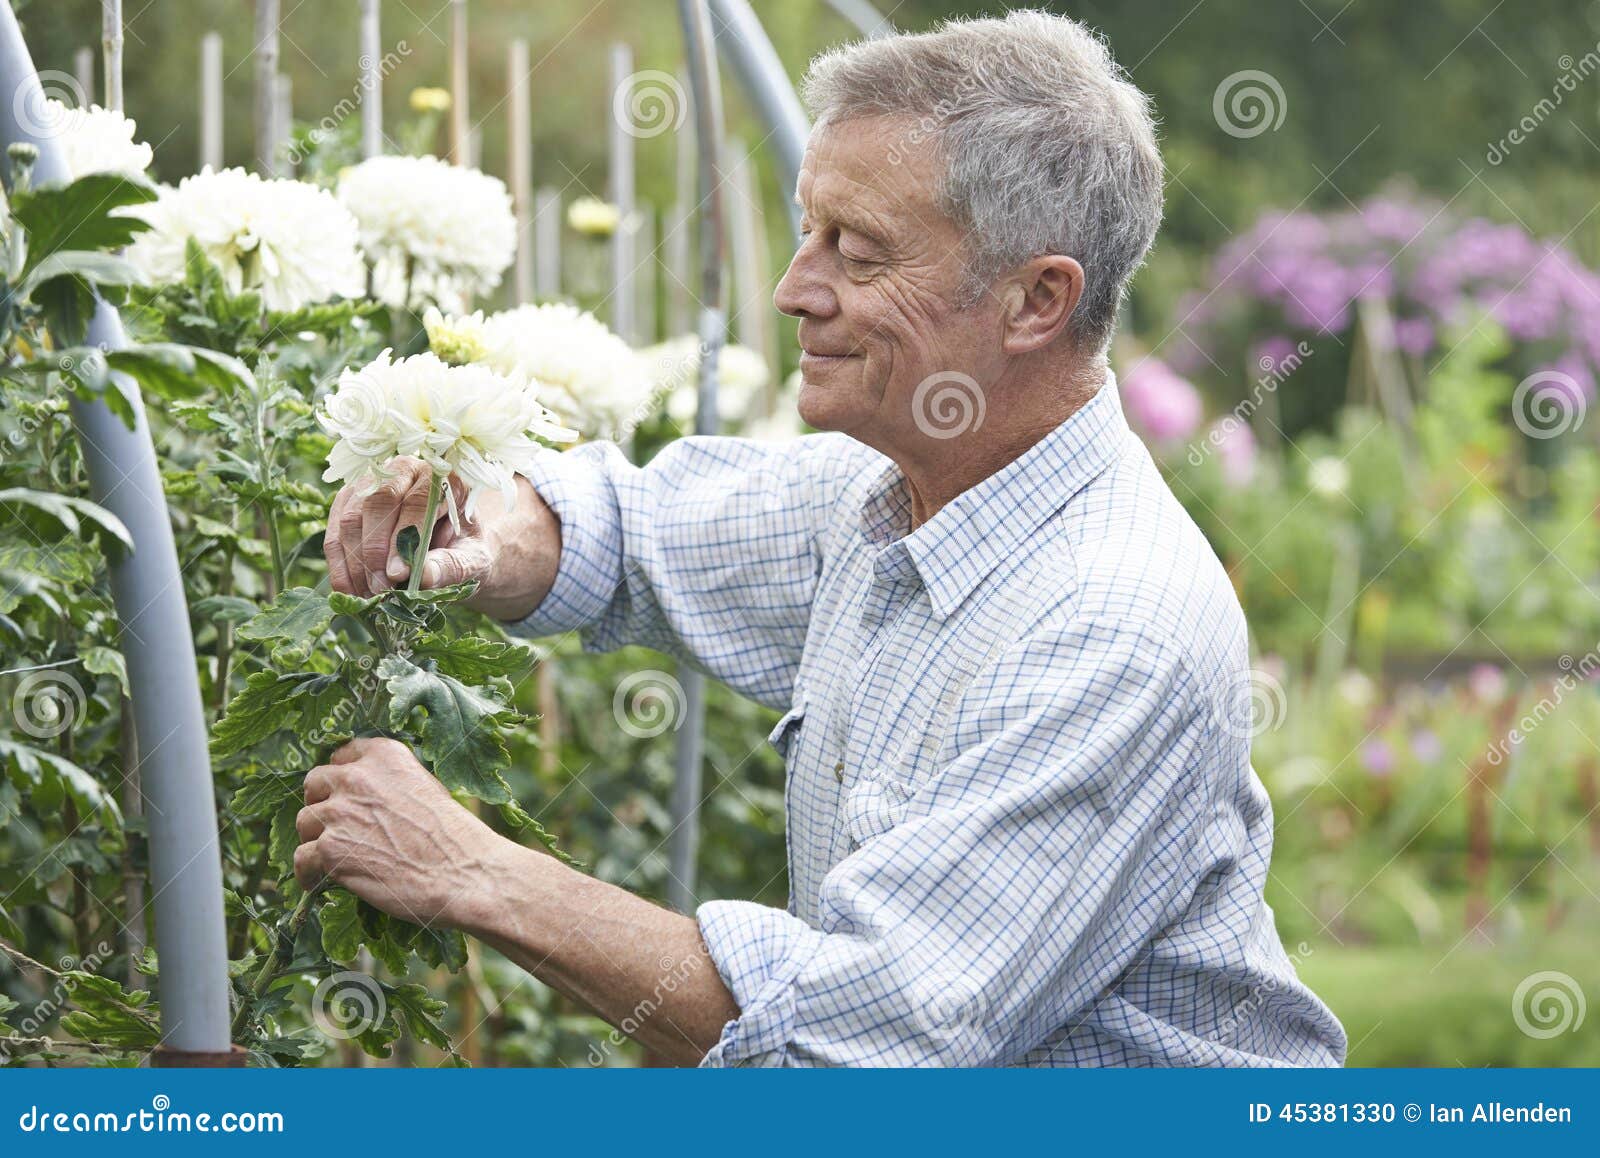 senior man cultivating flowers in garden